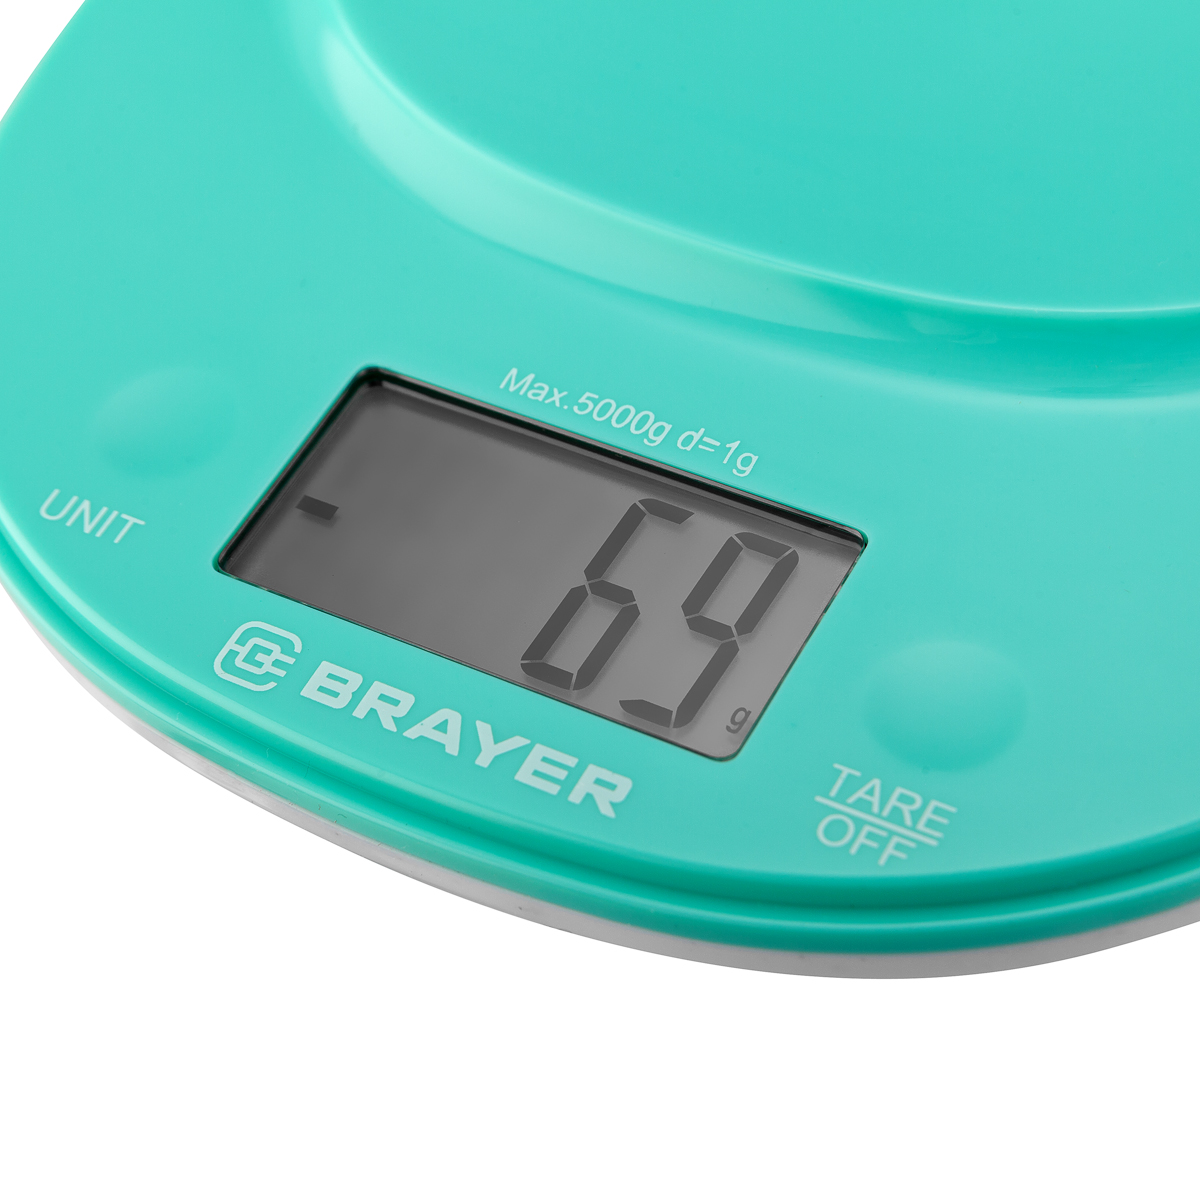 Кухонные весы BRAYER BR1802